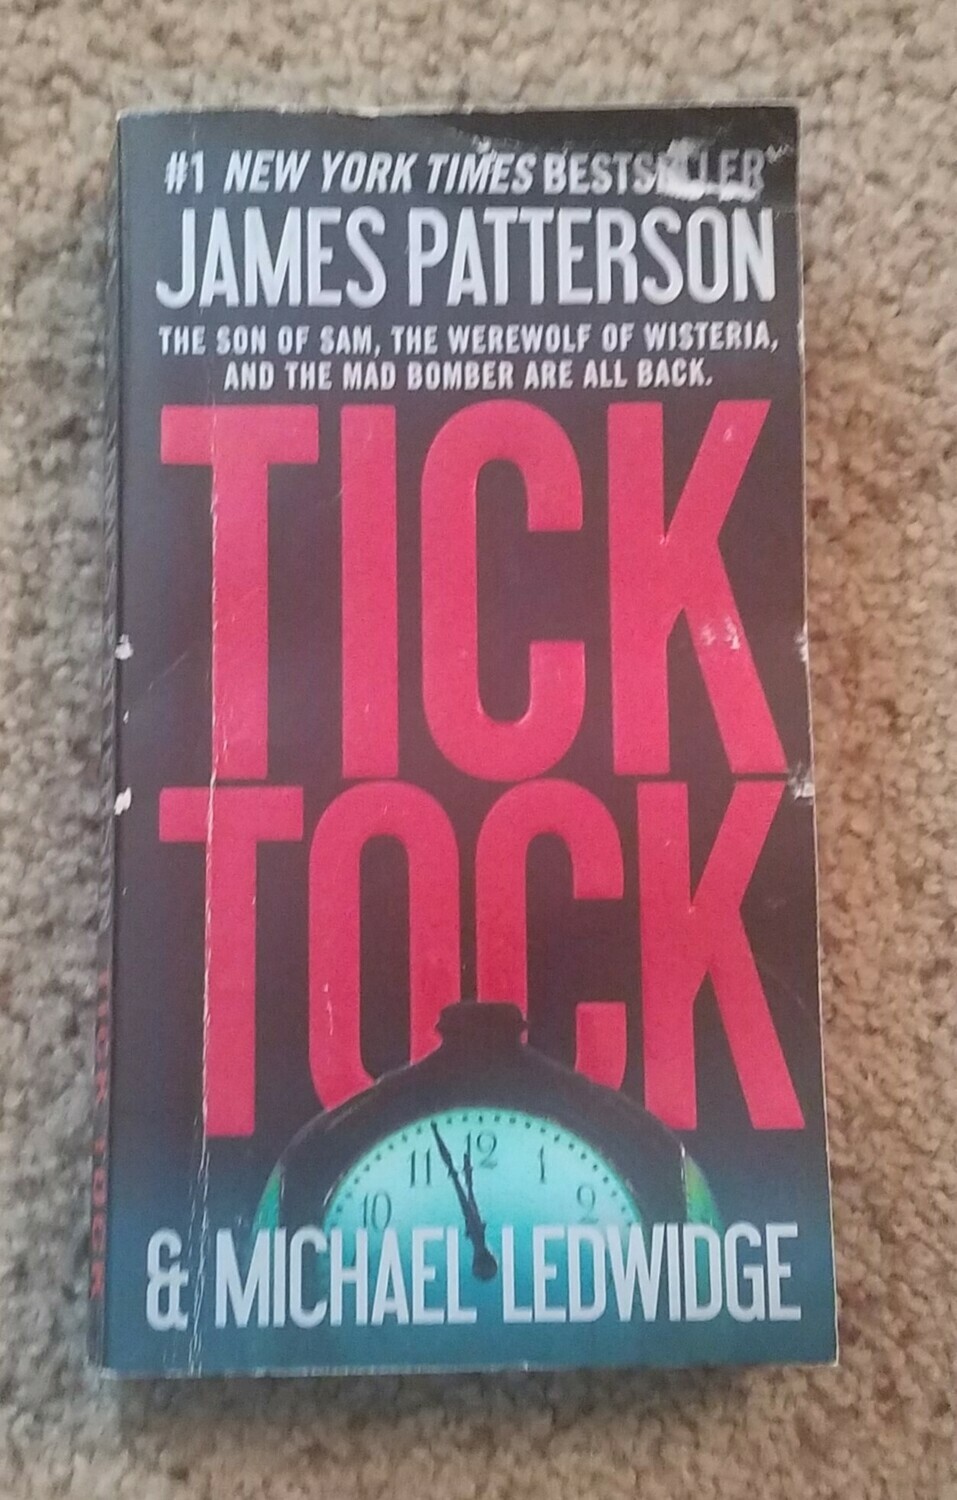 Tick Tock by James Patterson and Michael Ledwidge